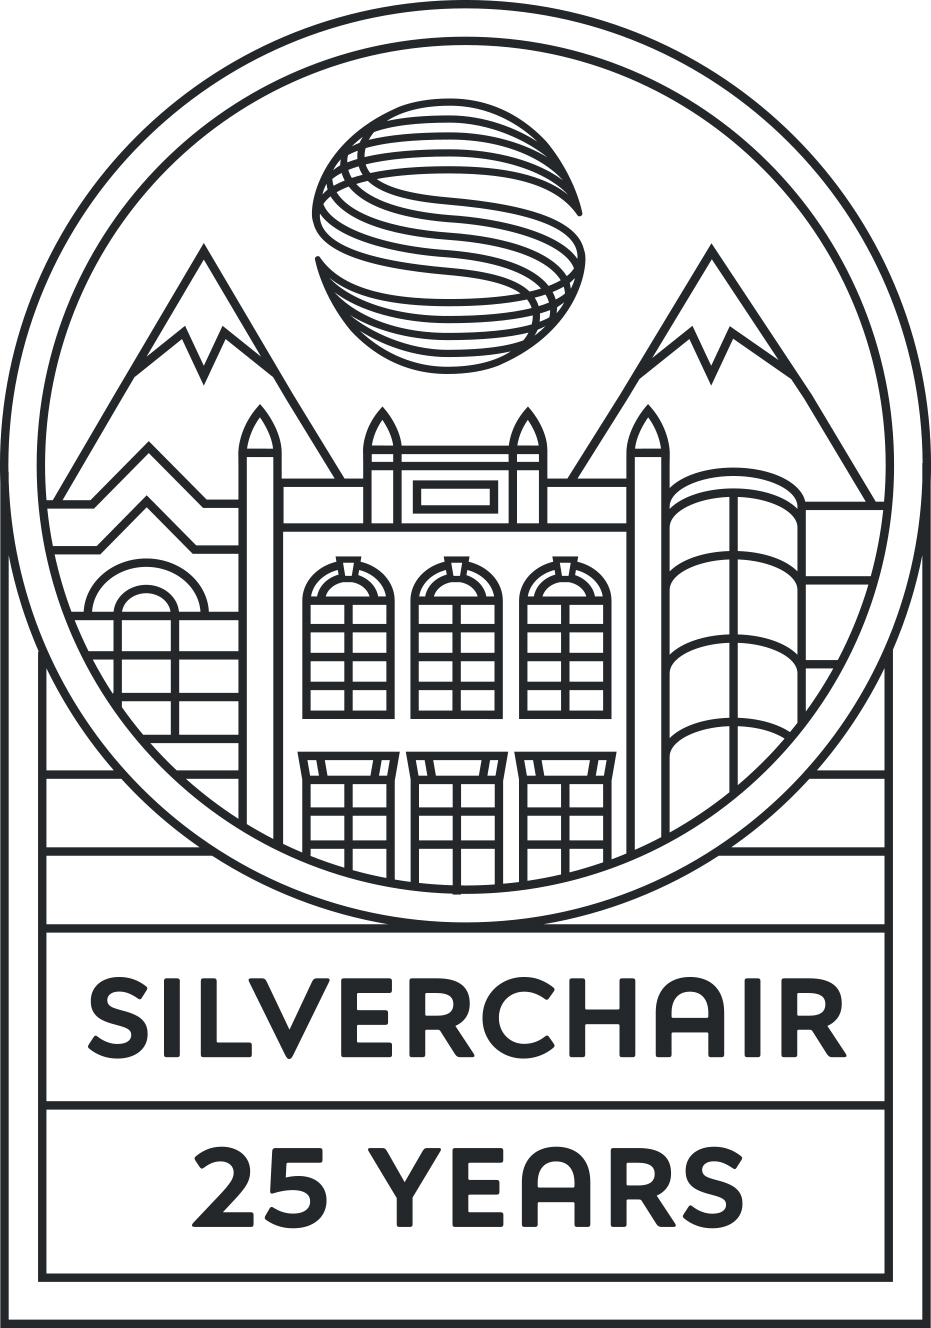 Silverchair: 25 years